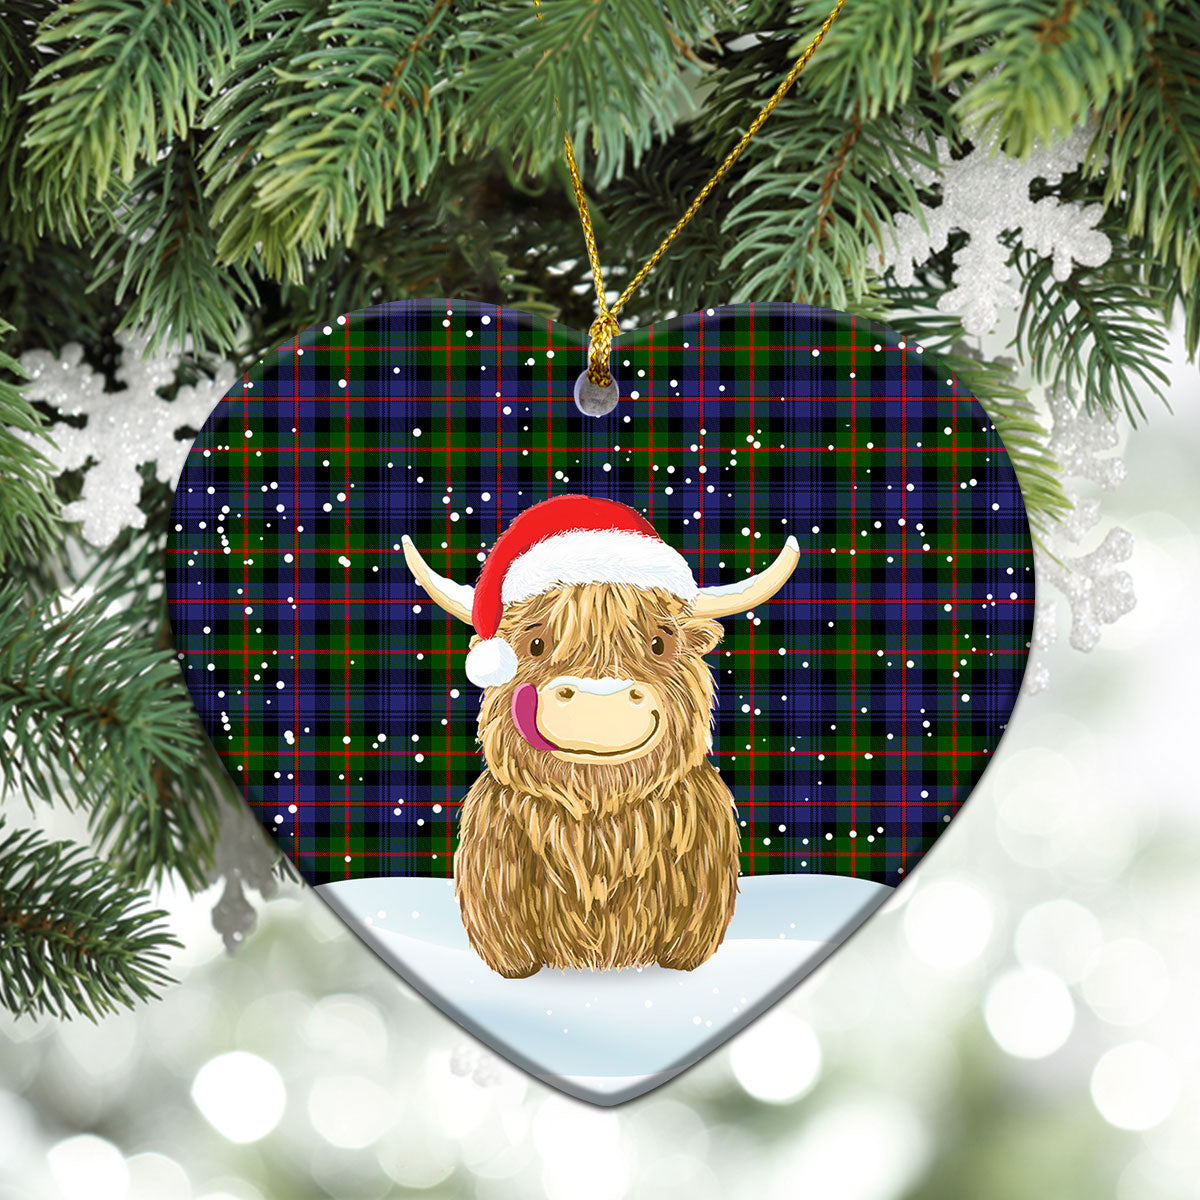 Fleming Tartan Christmas Ceramic Ornament - Highland Cows Style